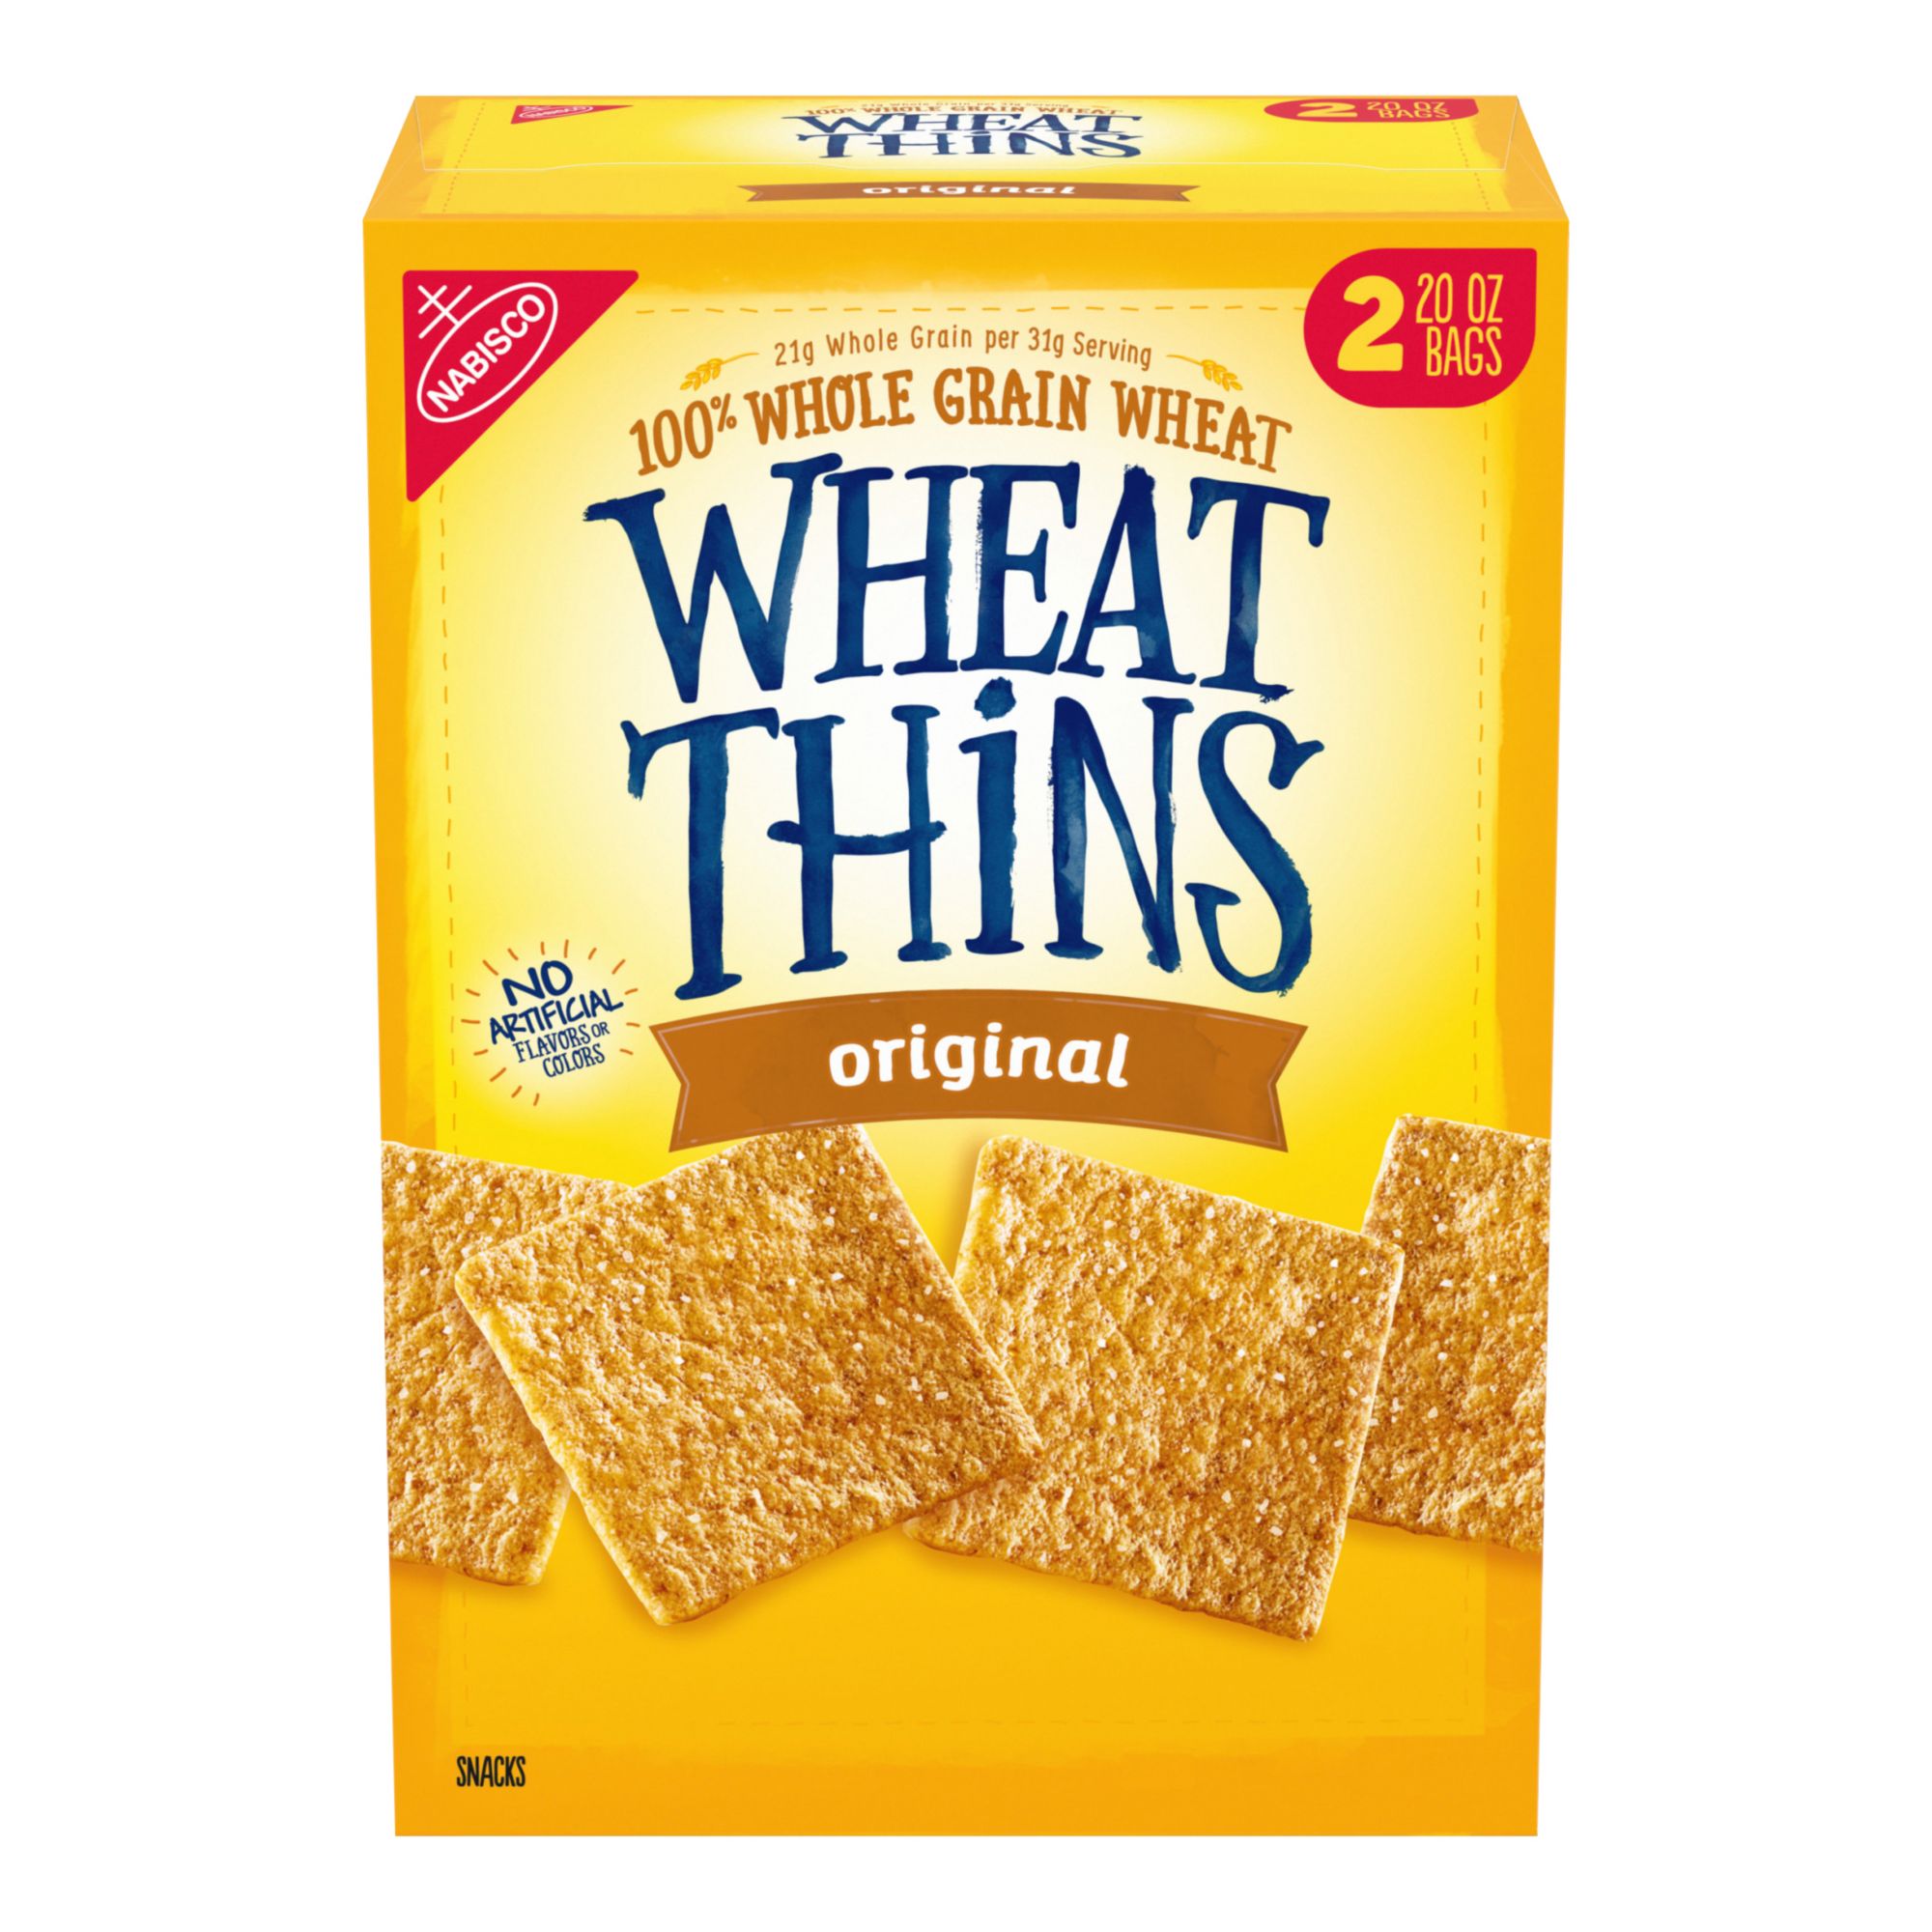 Wheat Thins Original Whole Grain Wheat Crackers, 2 pk./20 oz.